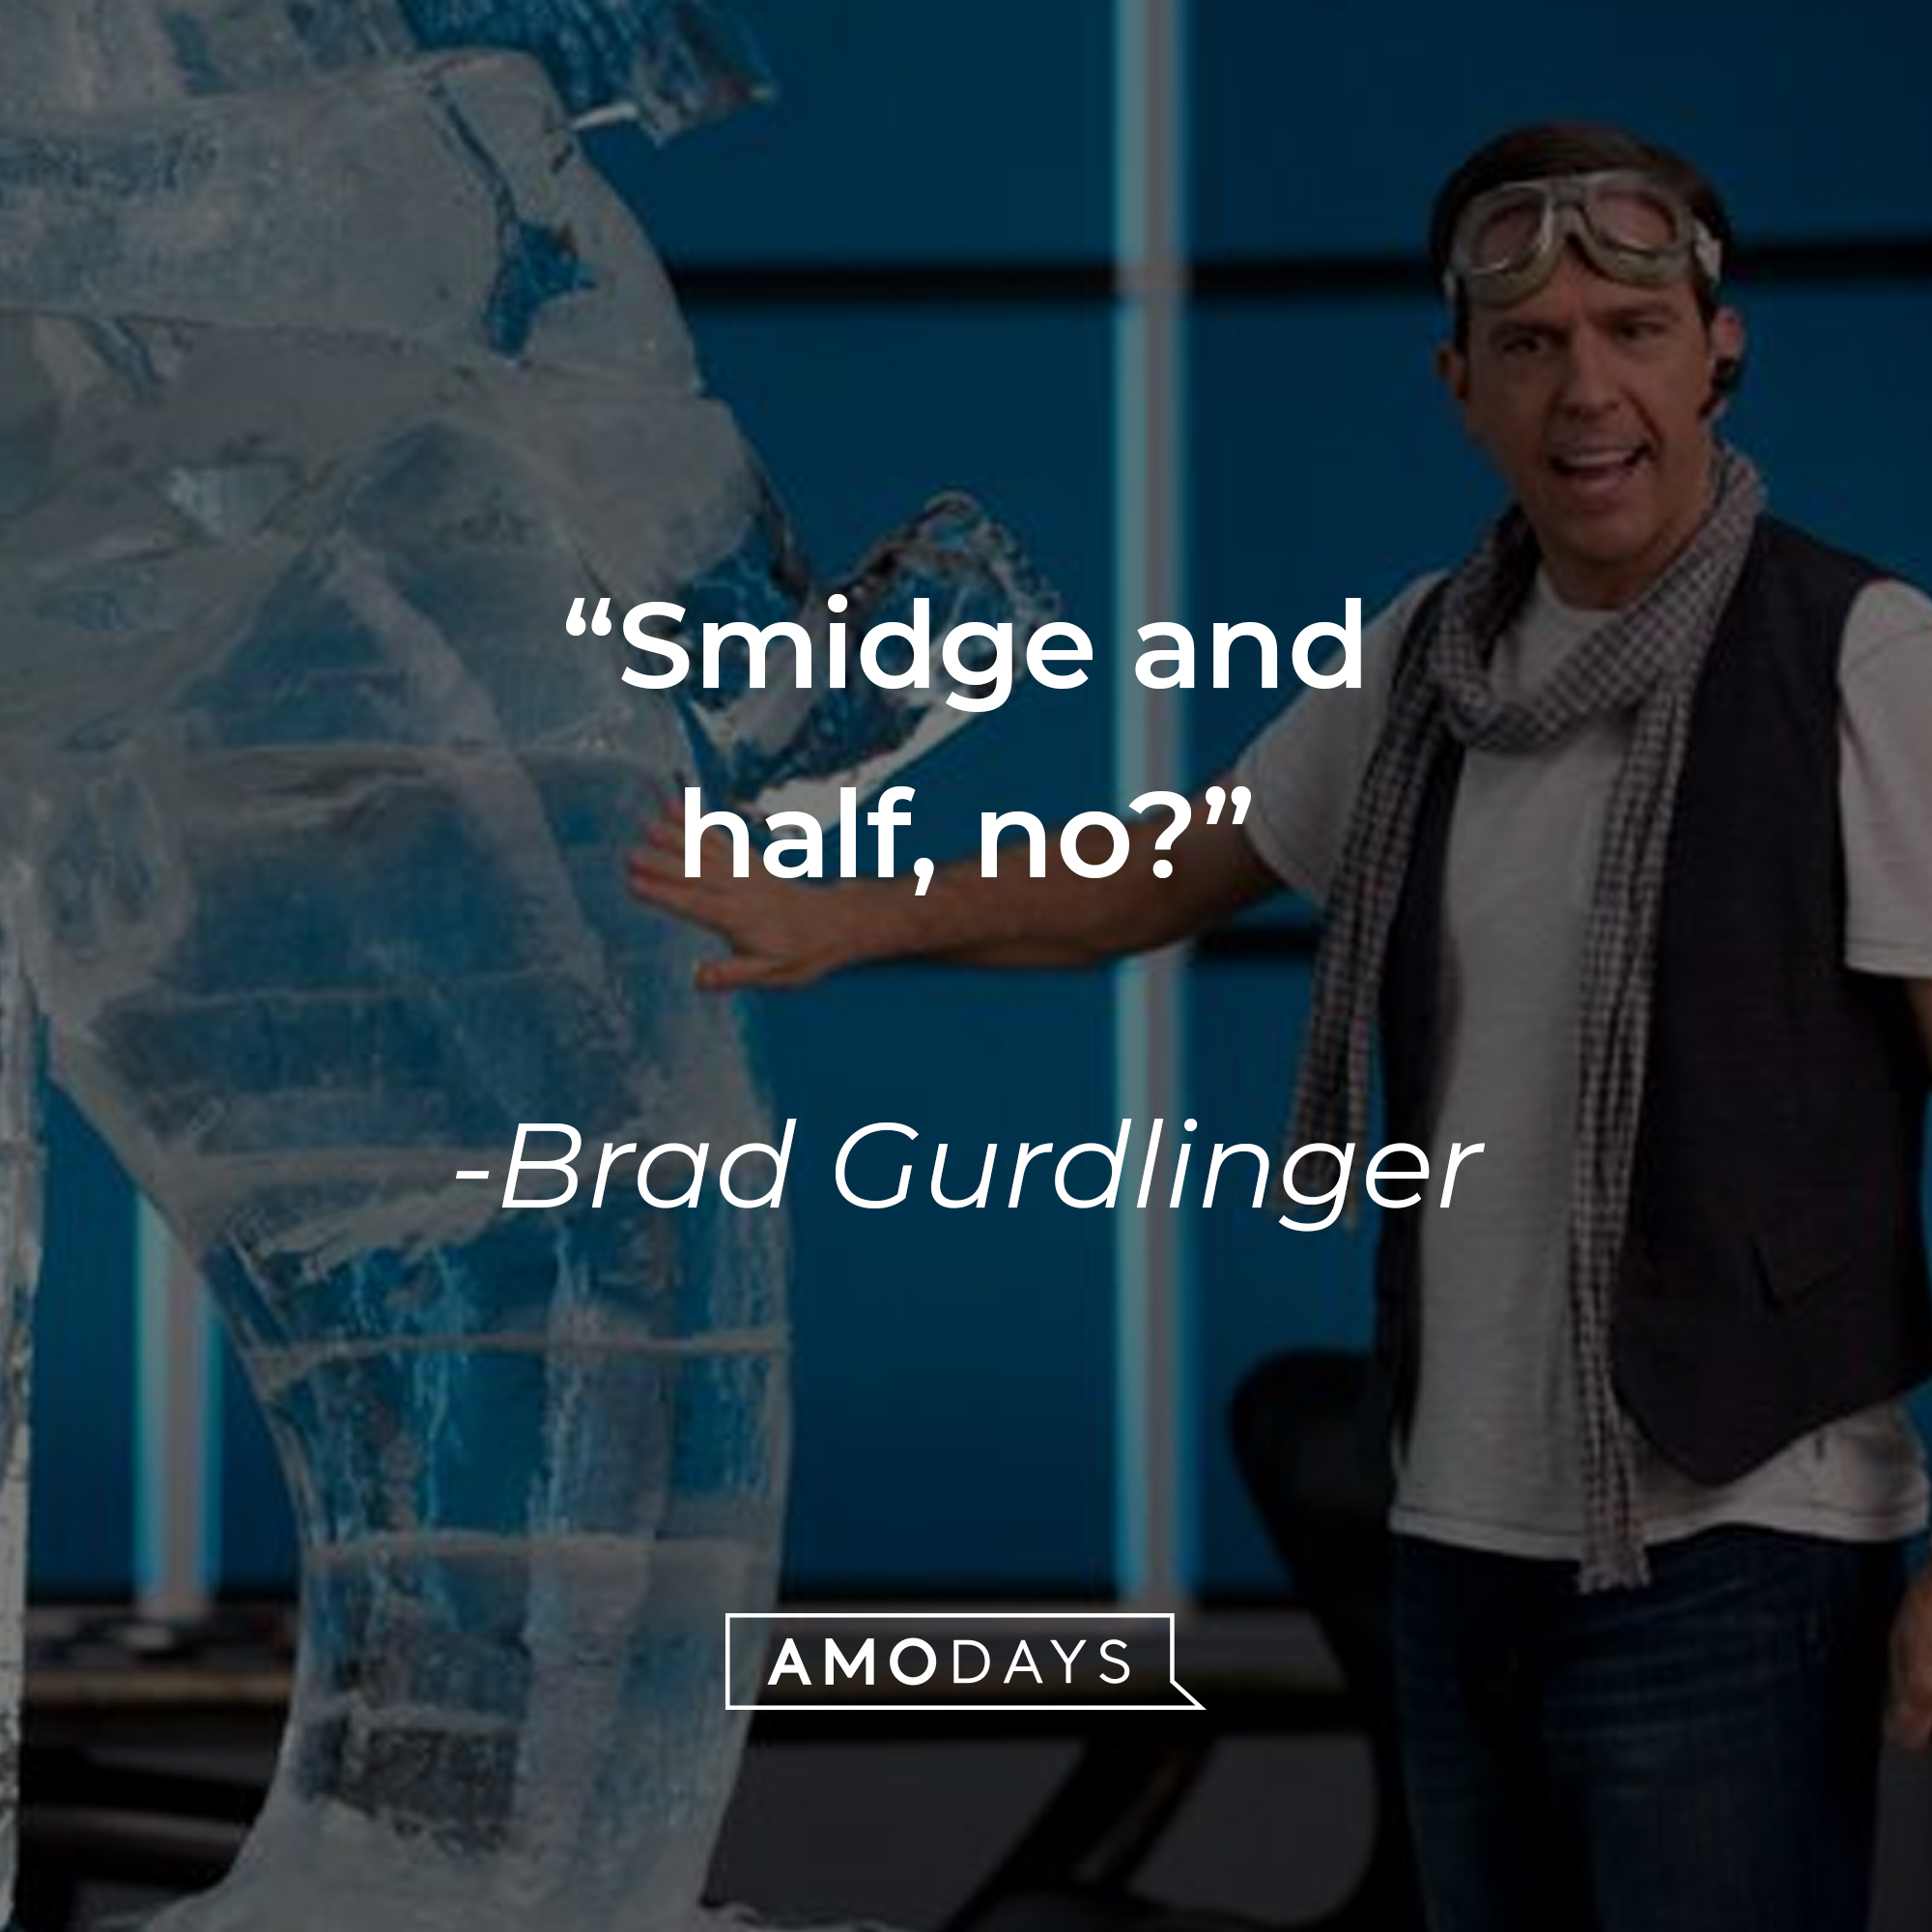 Brad Gurdlinger's quote: “Smidge and half, no?” | Source: facebook.com/WereTheMillersUK